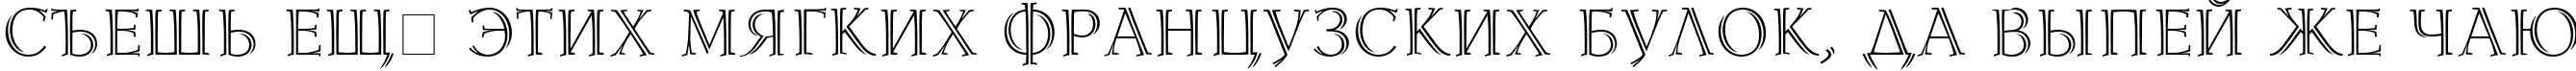 Пример написания шрифтом Lidia Cyr текста на русском